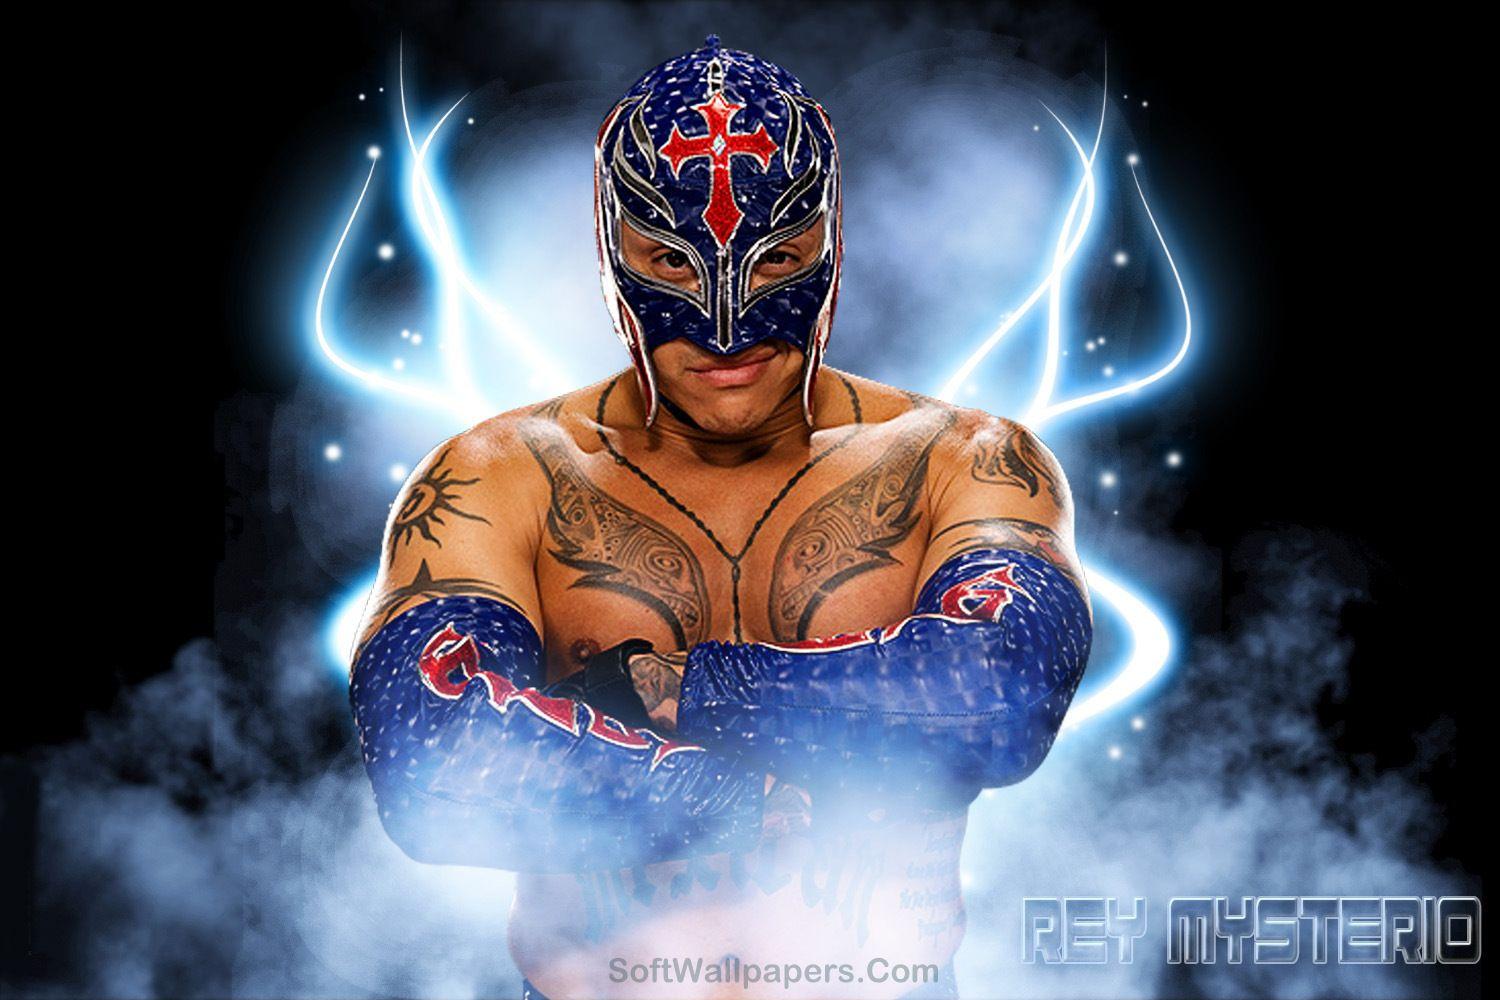 Rey Mysterio Wallpaper. World championship wrestling, Wwe tag